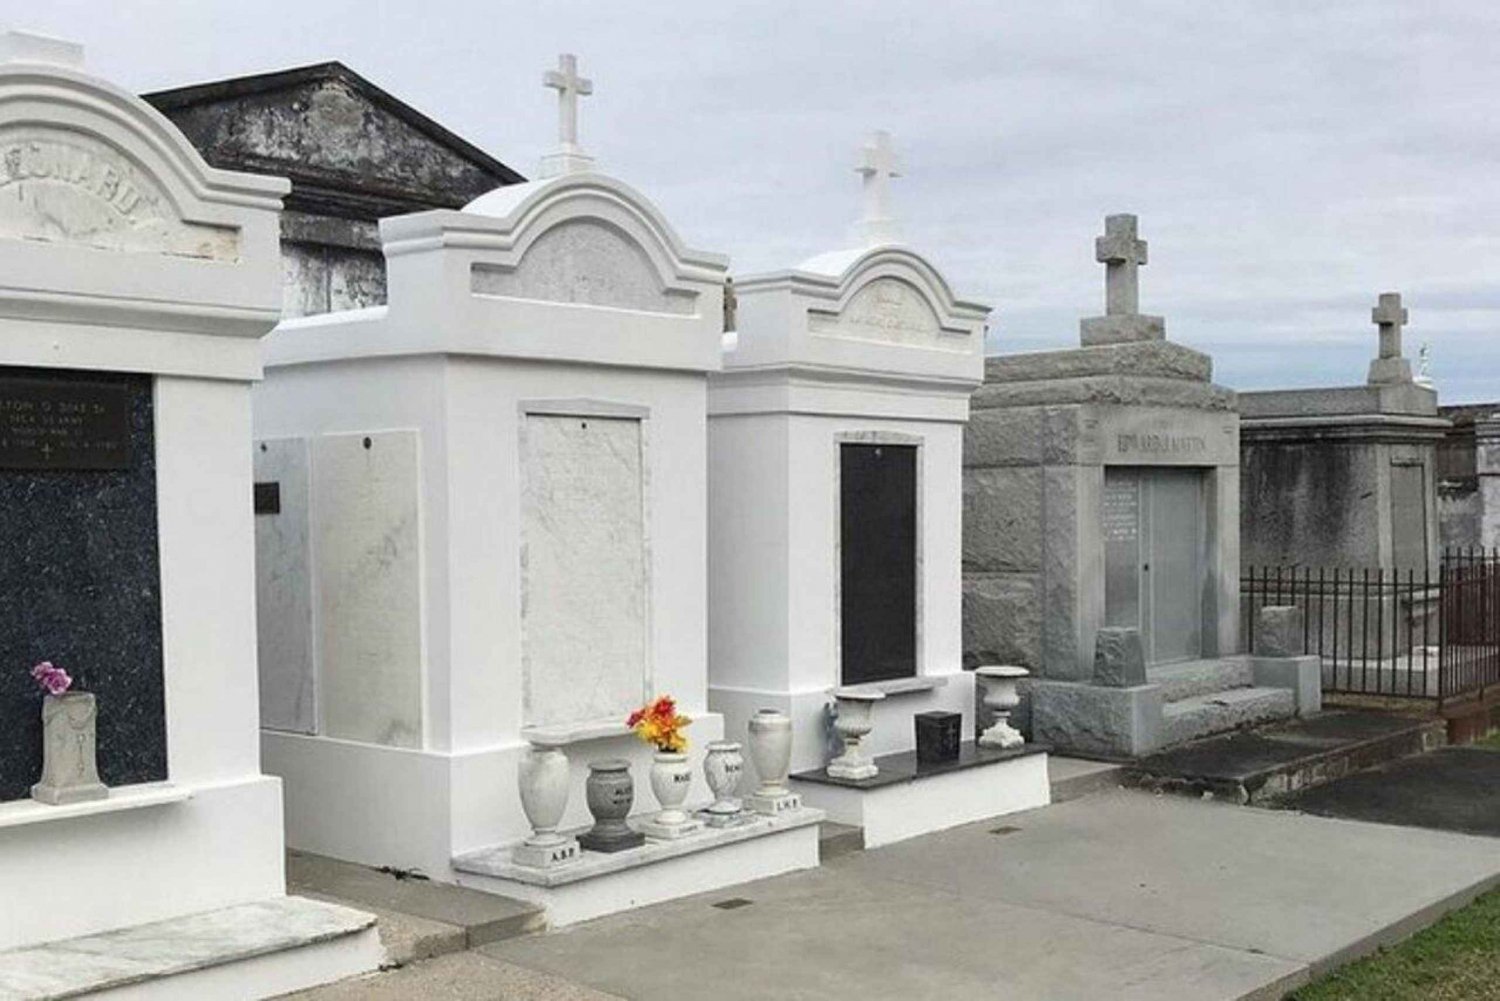 New Orleans: Stadsrondleiding en Cemetery Sightseeingtour